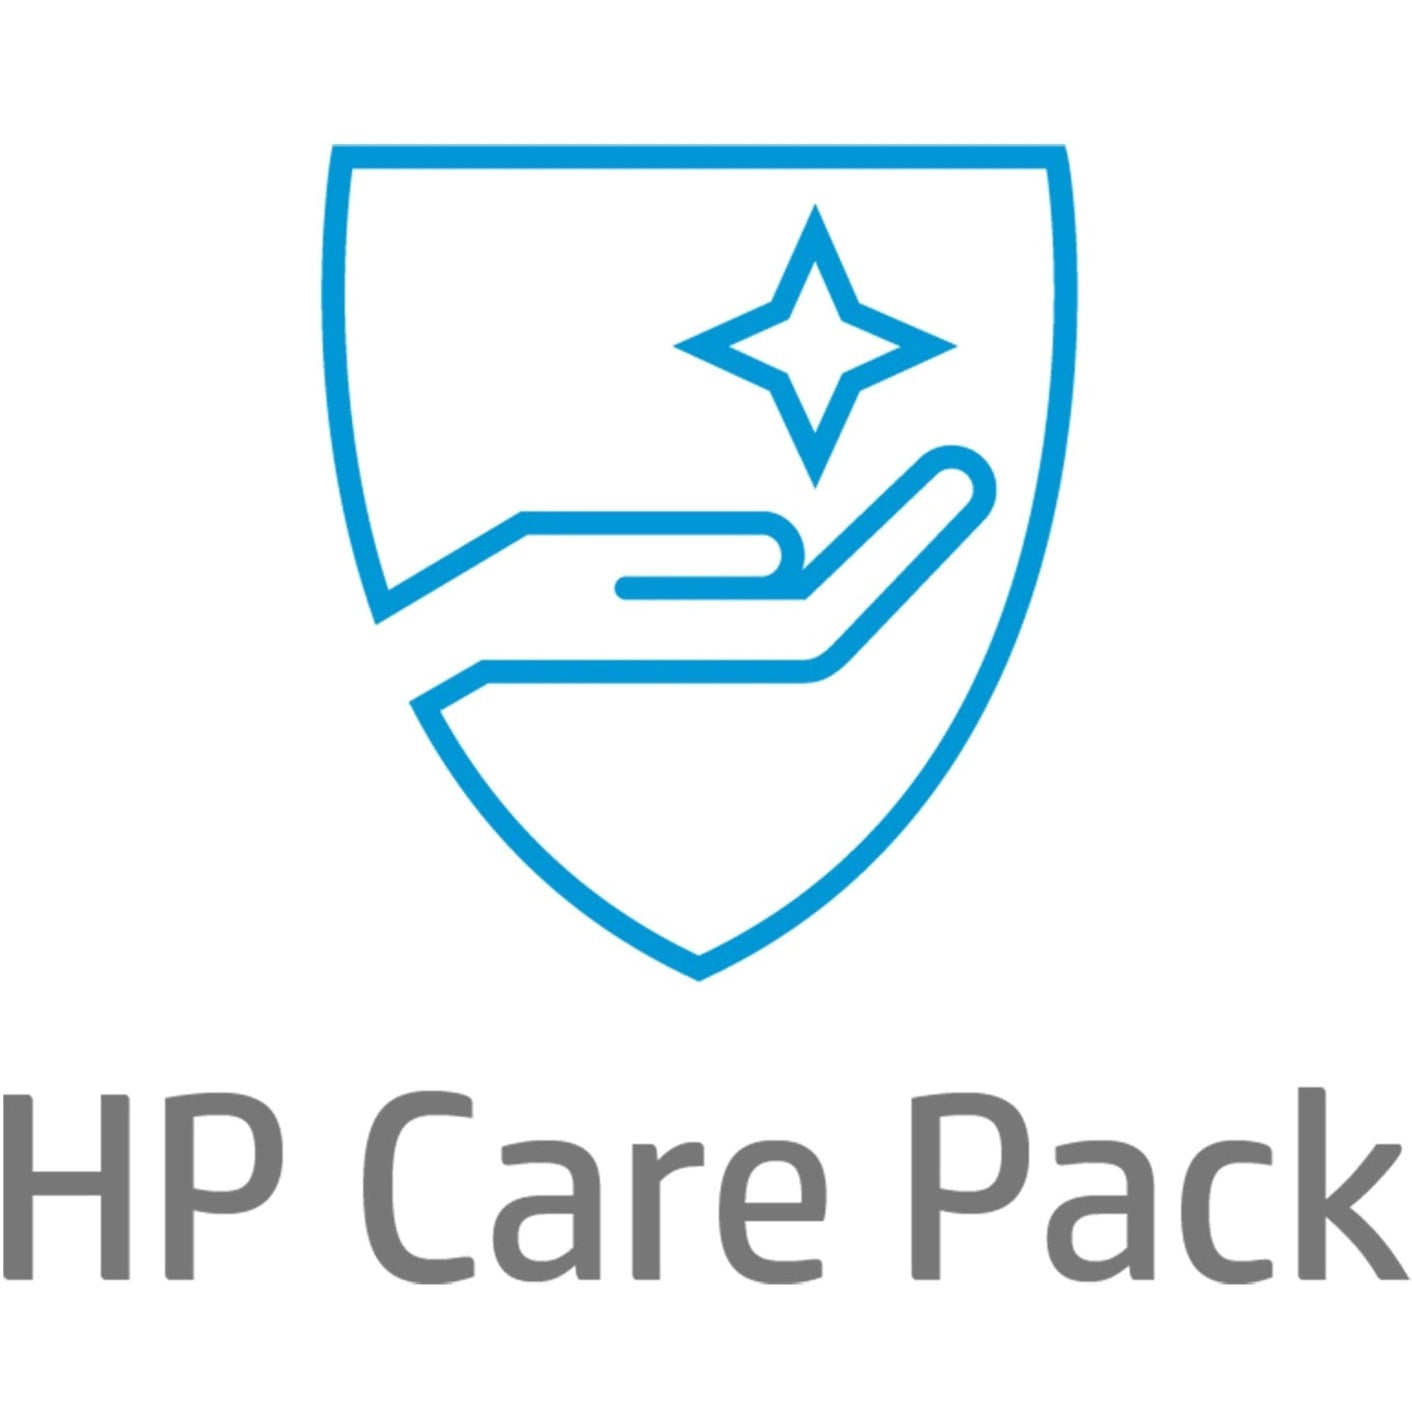 HP Care Pack - 3 Year - Service (UQ826E)